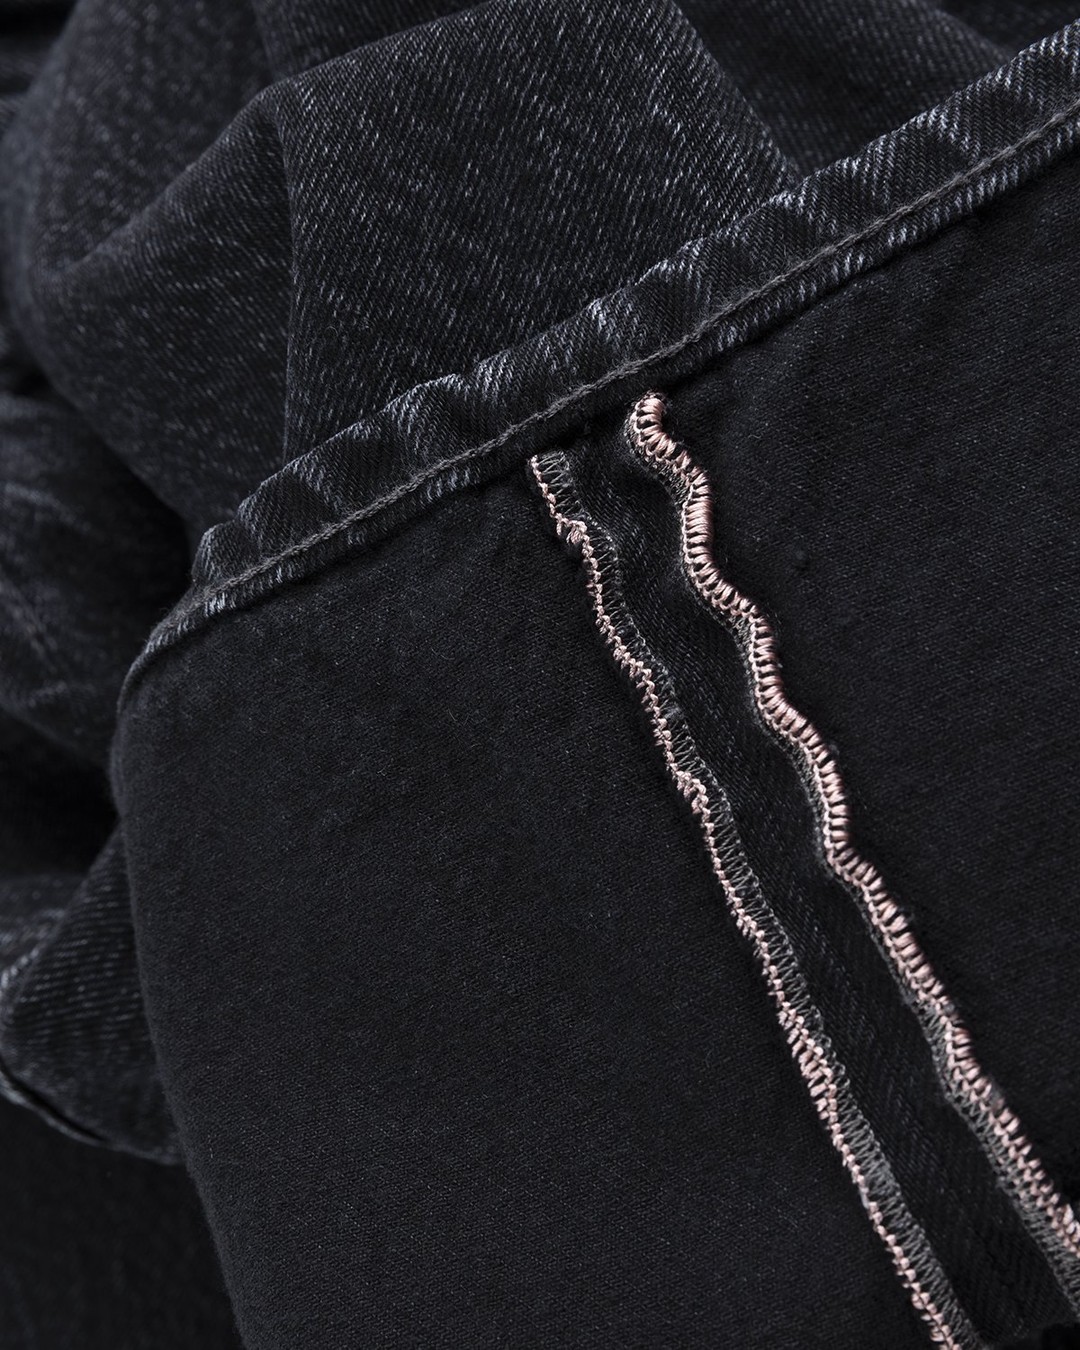 Acne Studios – Brutus 2021M Boot Cut Jeans Black - Denim - Black - Image 6